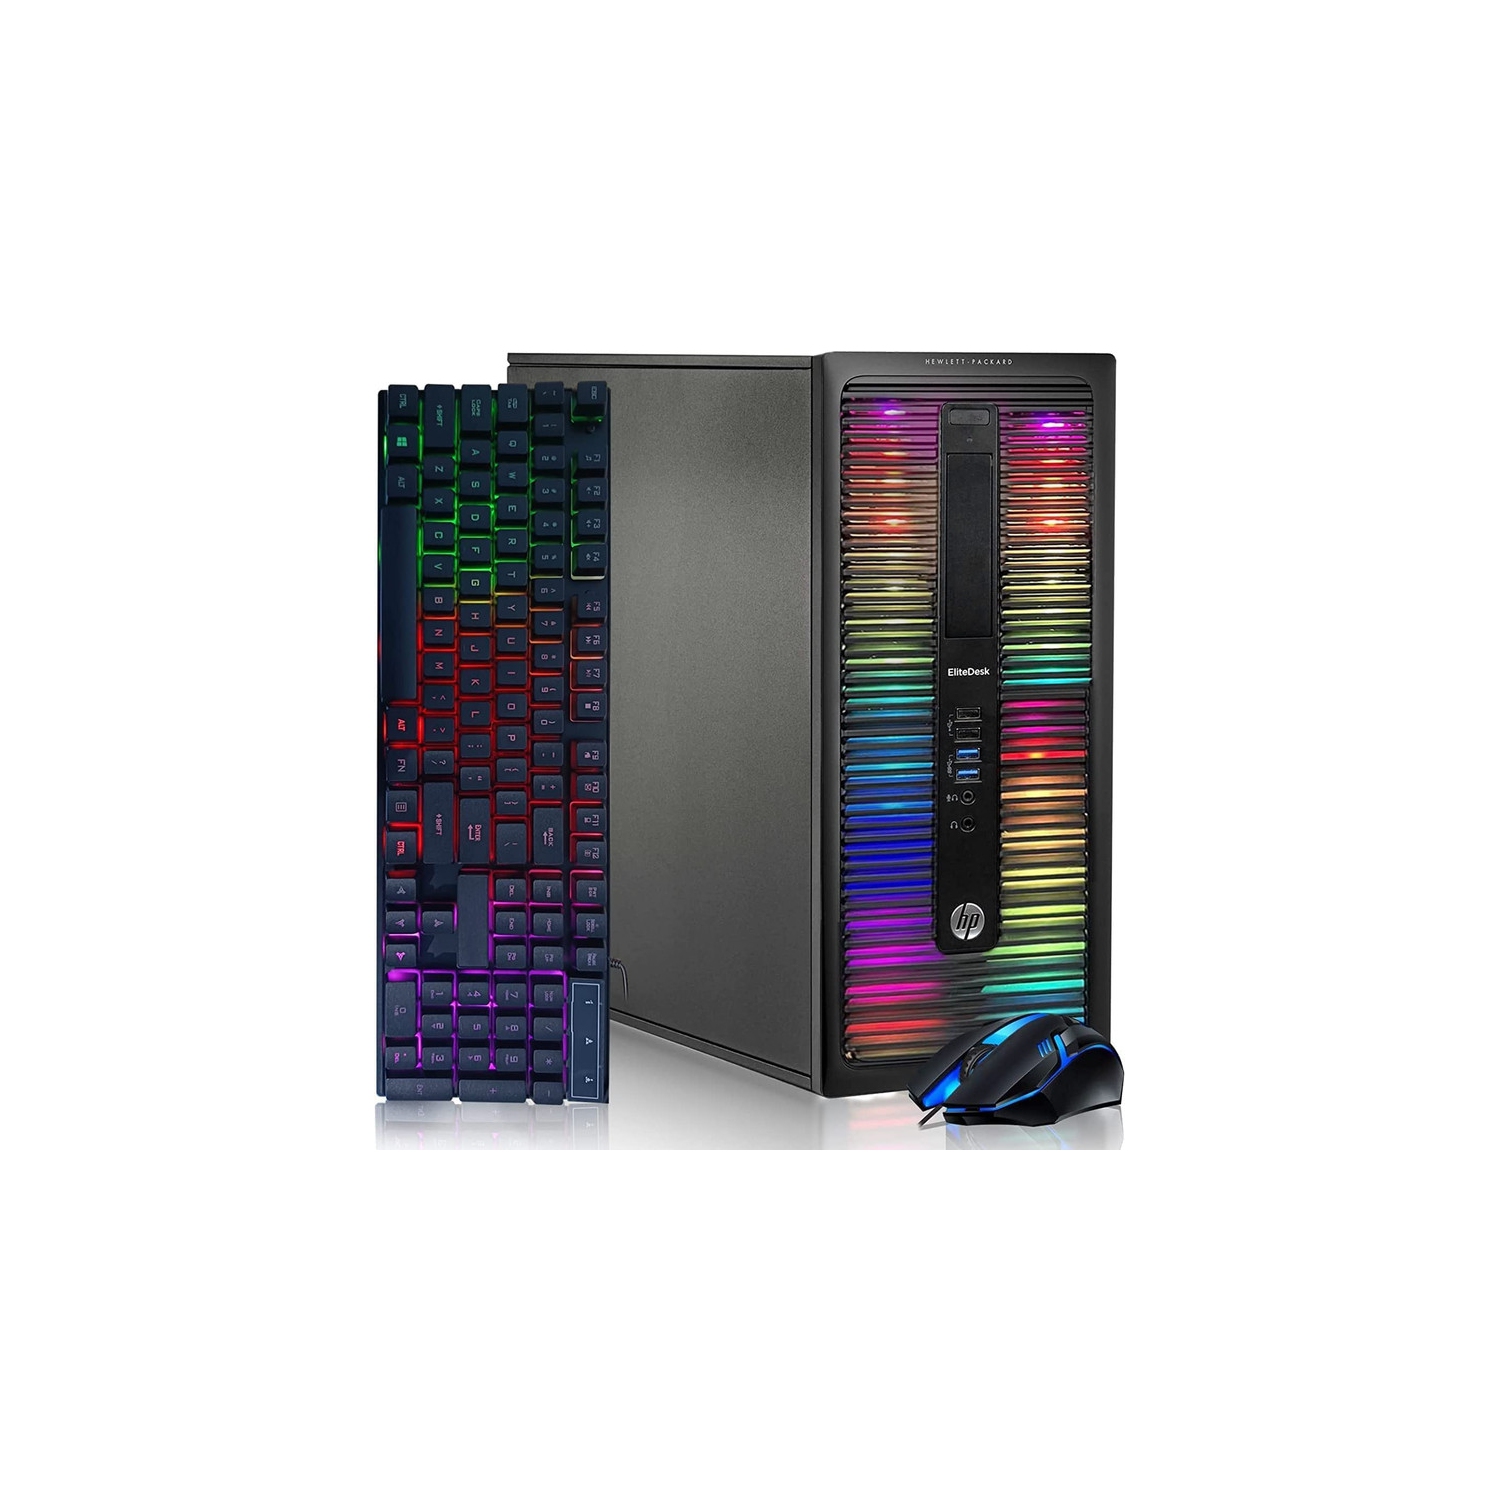 HP RGB Gaming Desktop Computer - Intel Quad I7 up to 3.9GHz, 32GB, 512G SSD + 3TB, GeForce GTX 1660 Super GDDR6 6G, RGB Keyboard & Mouse, WiFi & BT 5.0, Win 10 Pro -Refurbished